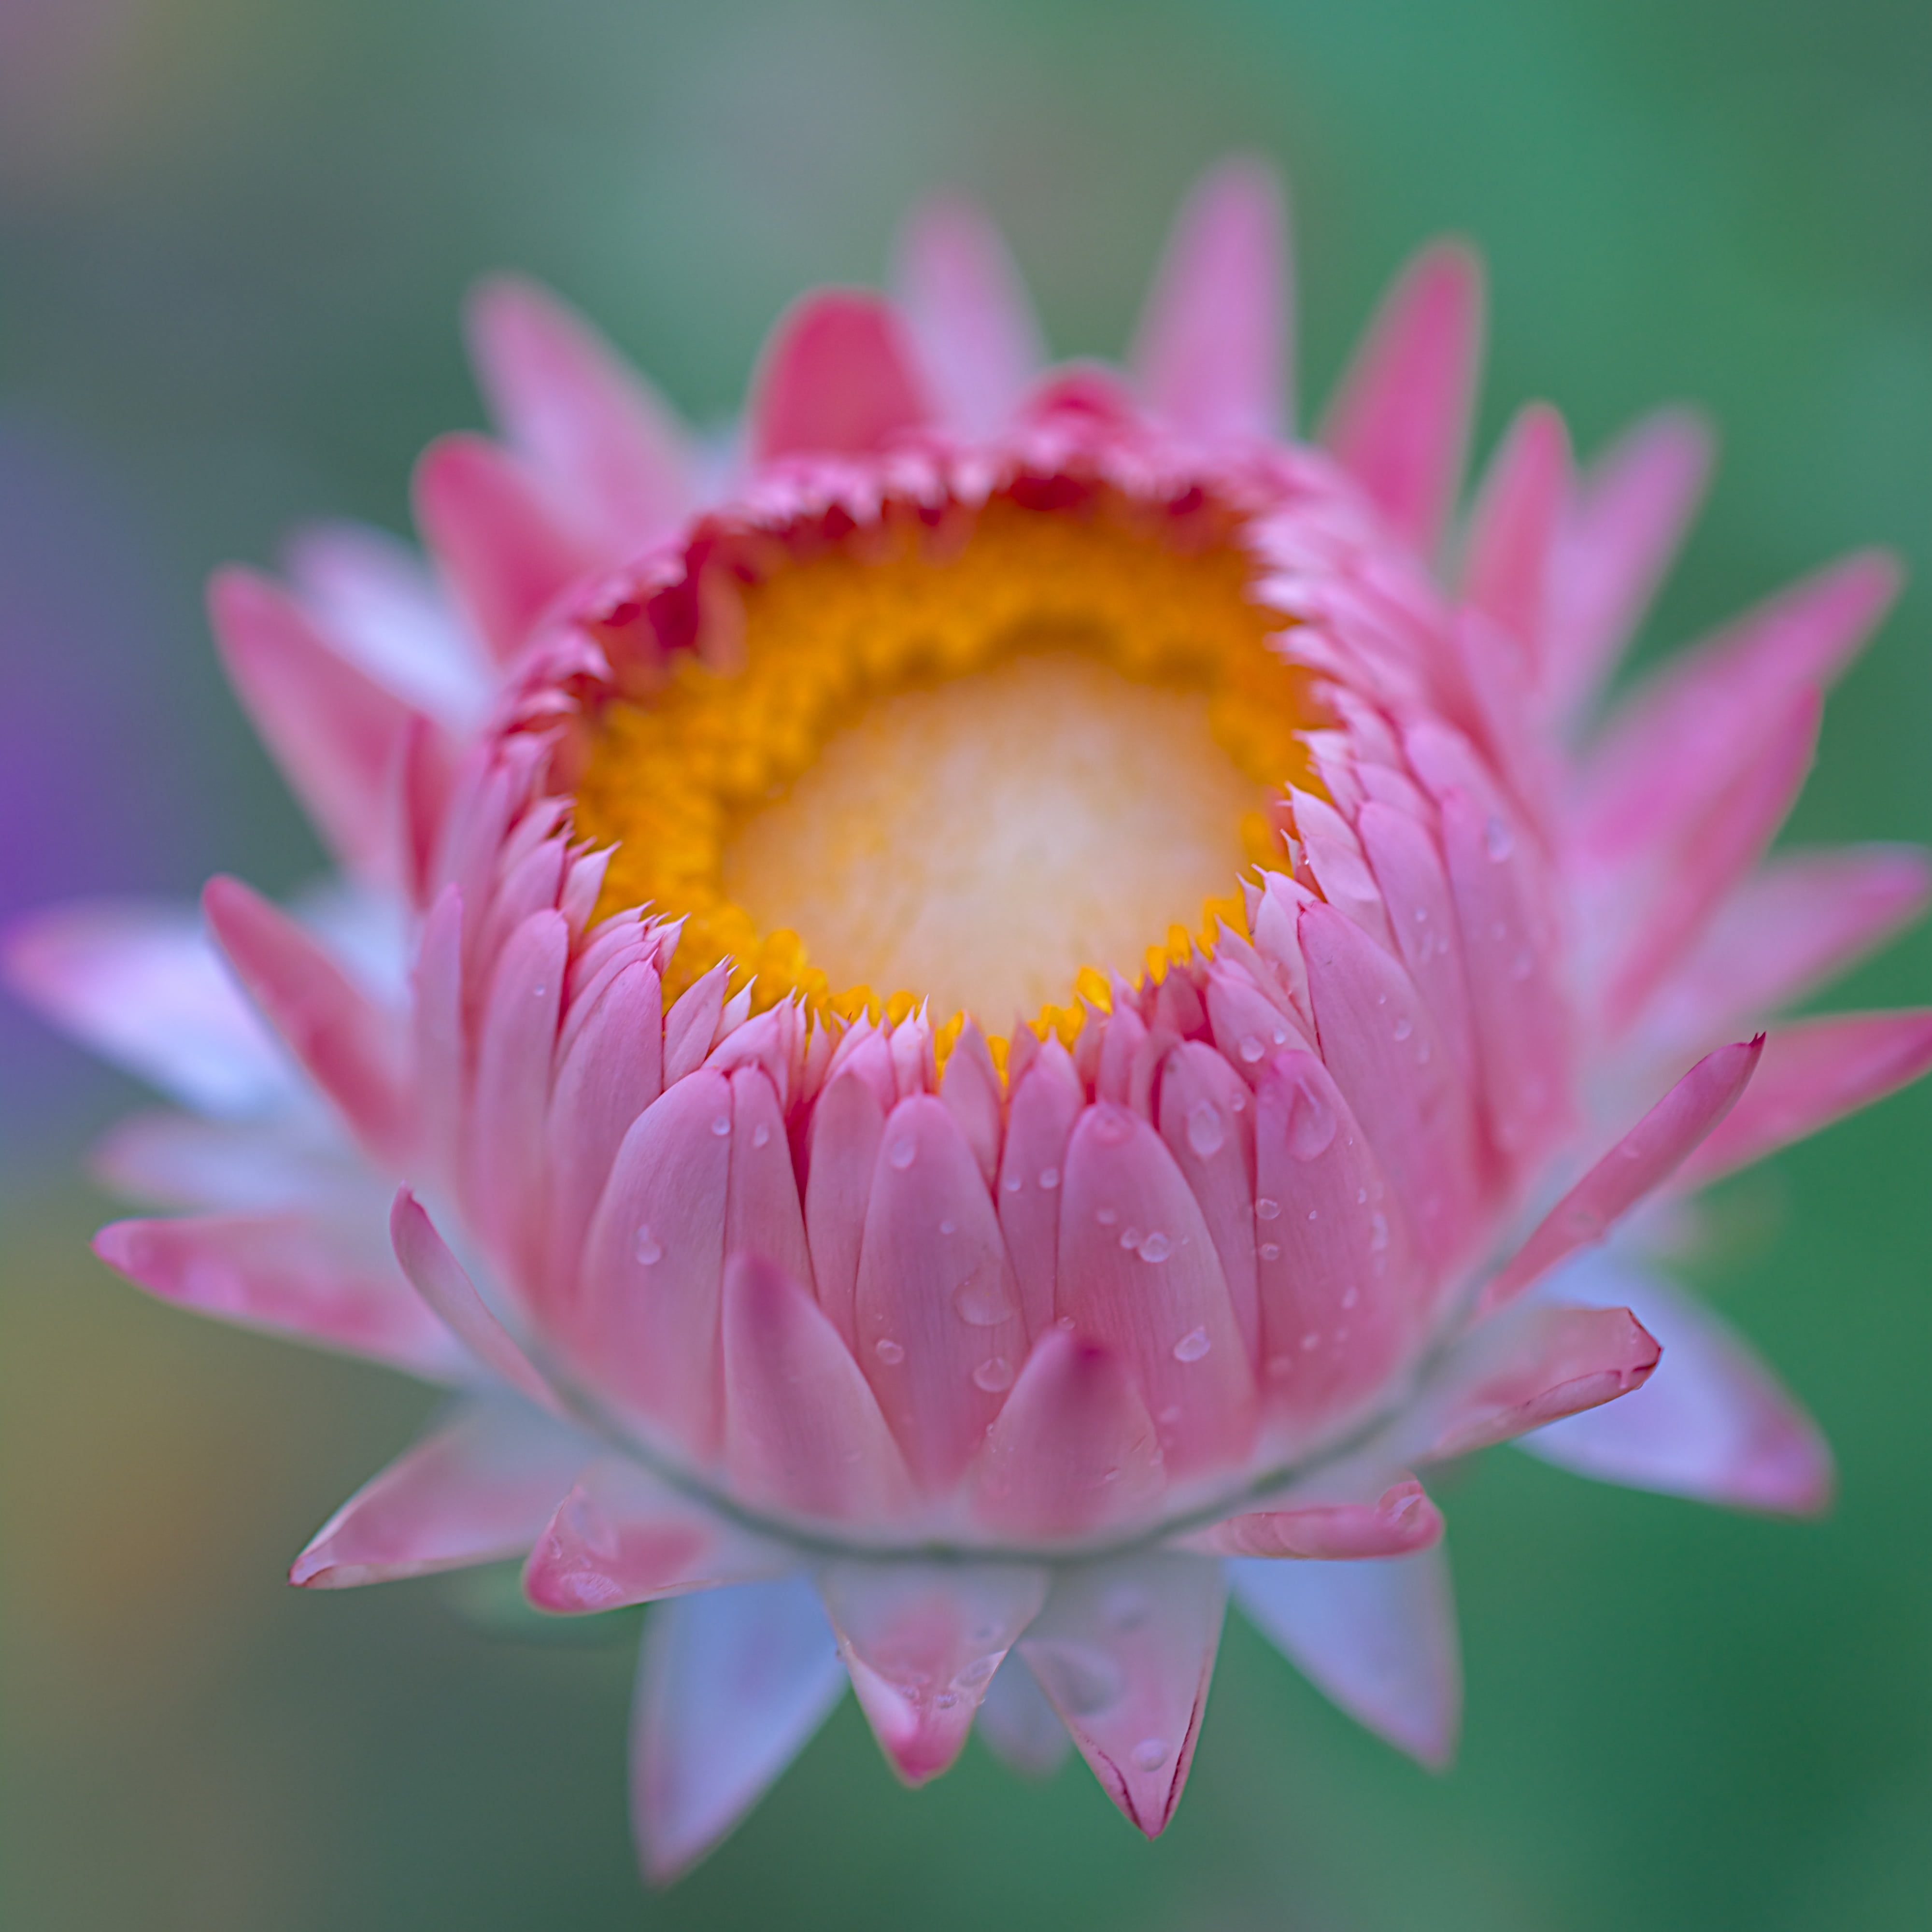 pink petaled flower in closeup shot